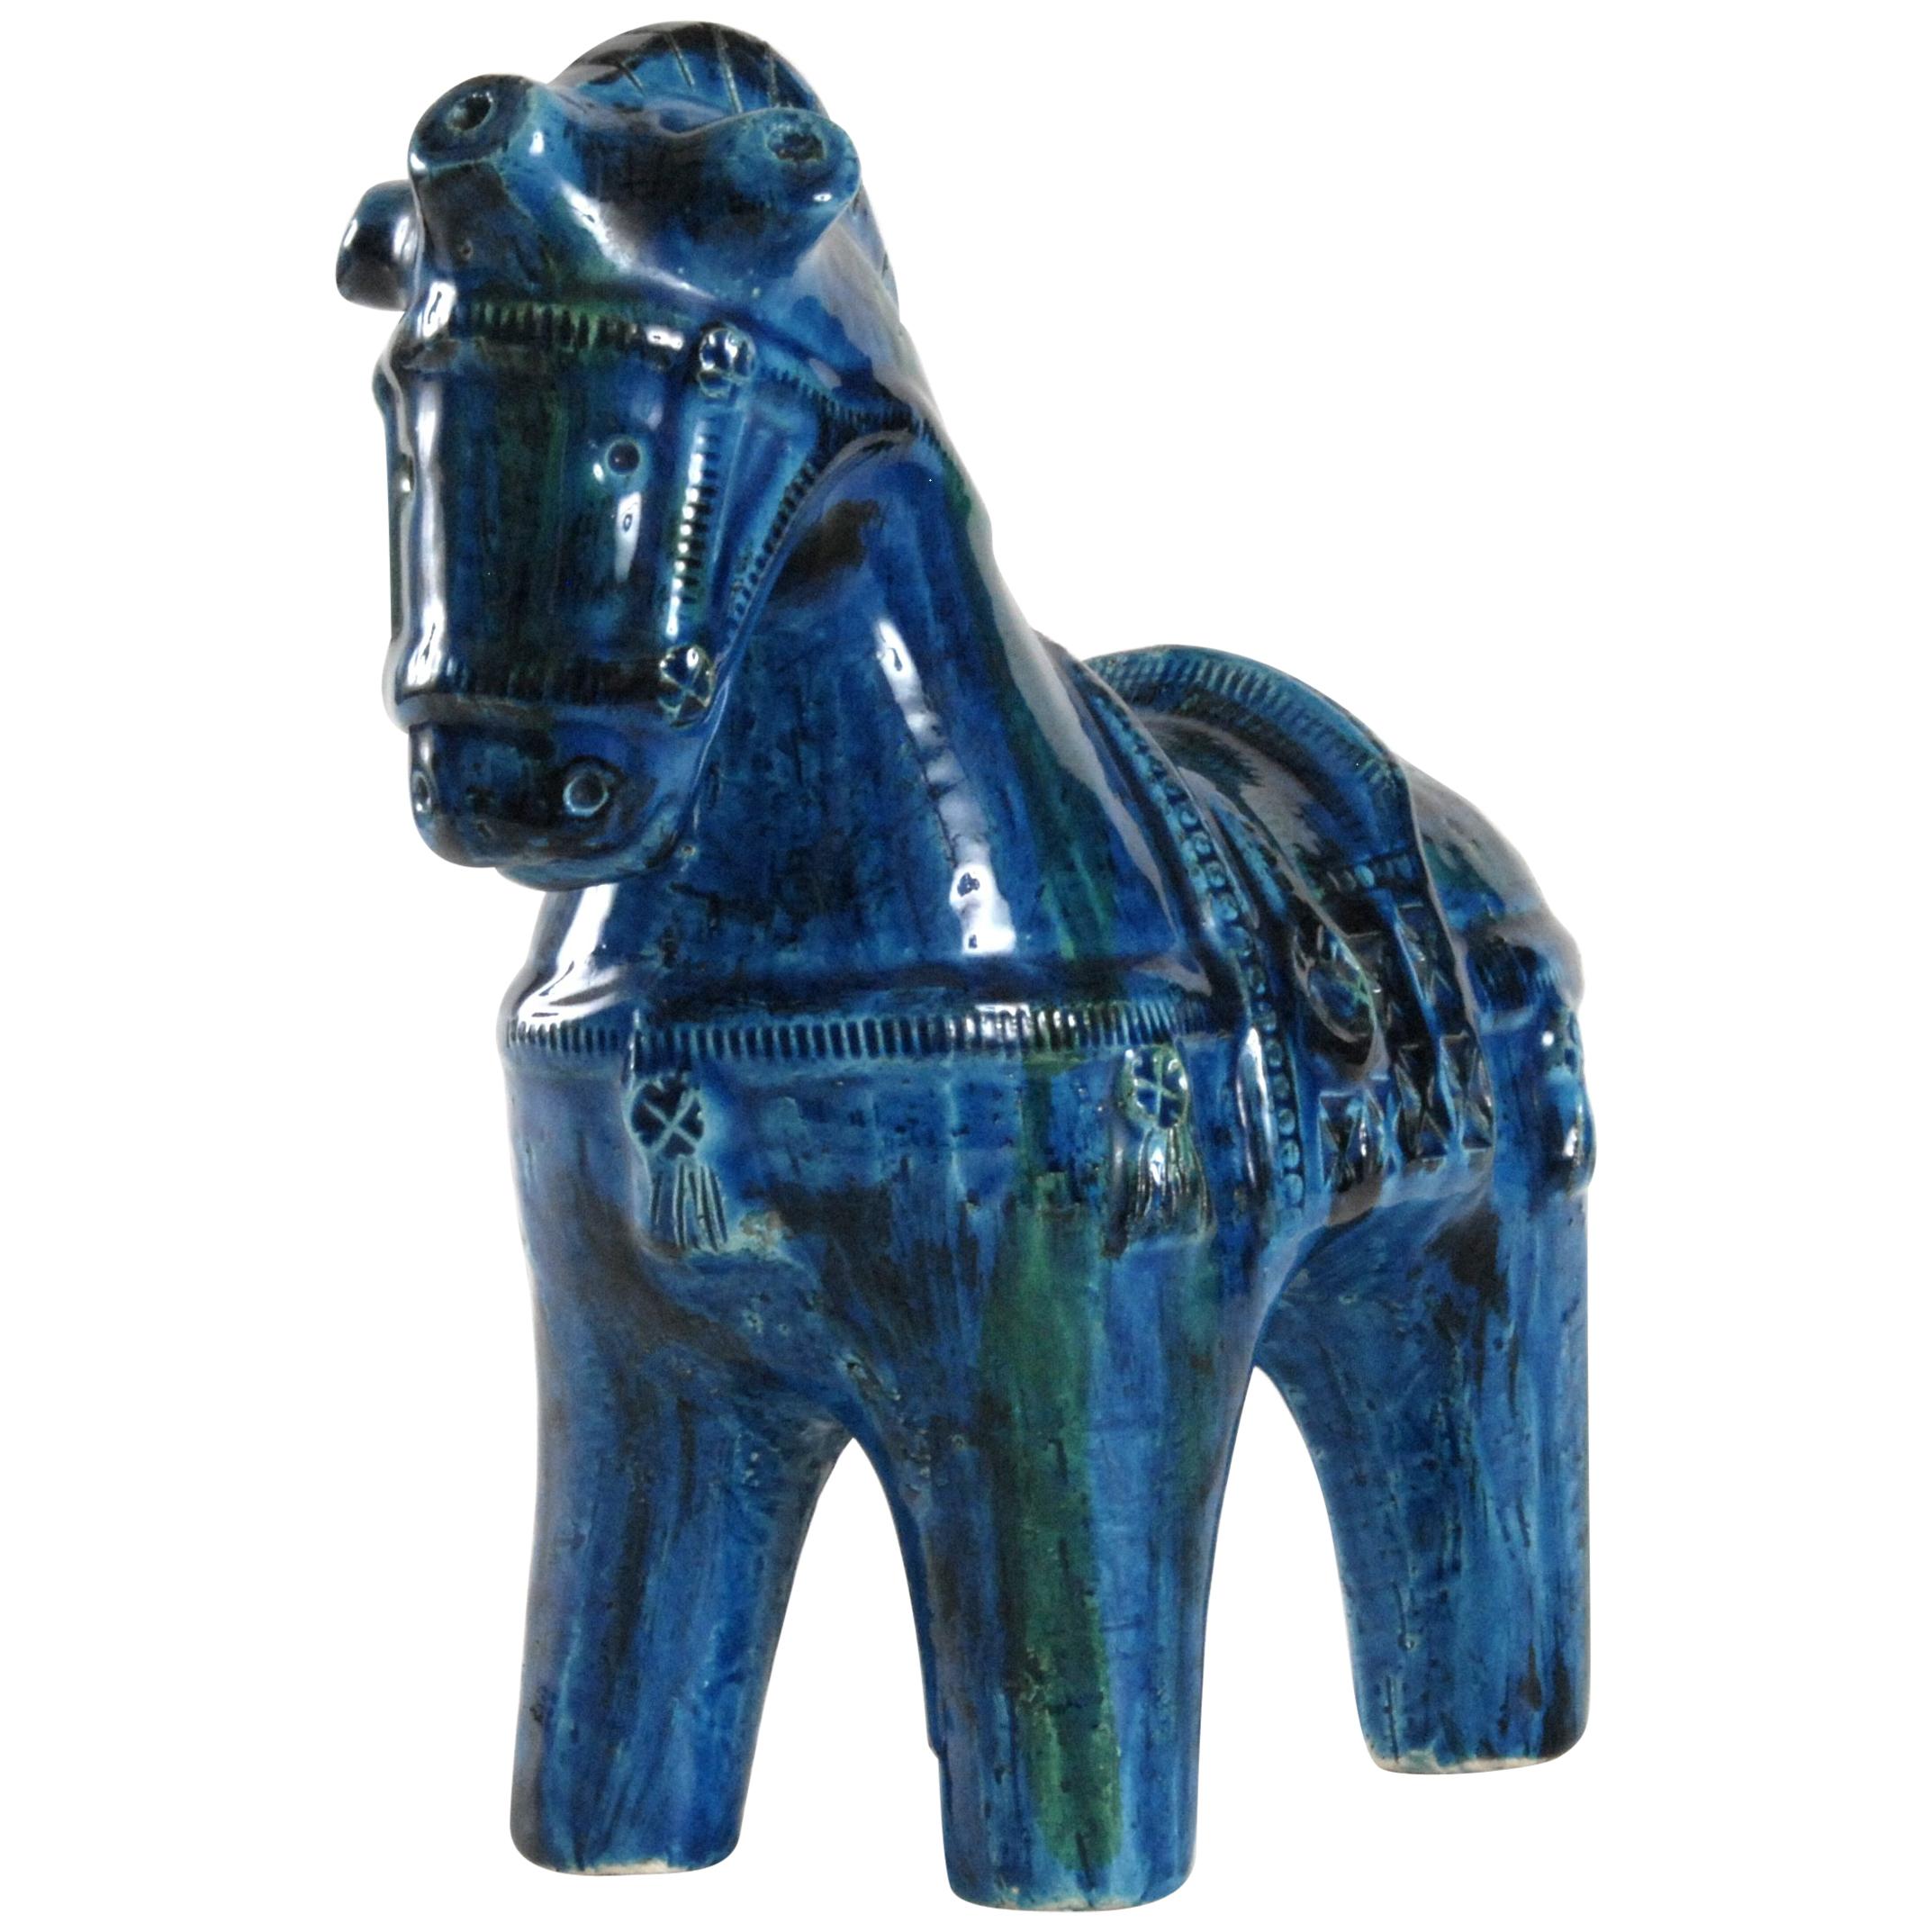 Bitossi Aldo Londi Rimini Blu Horse, Italy, circa 1968